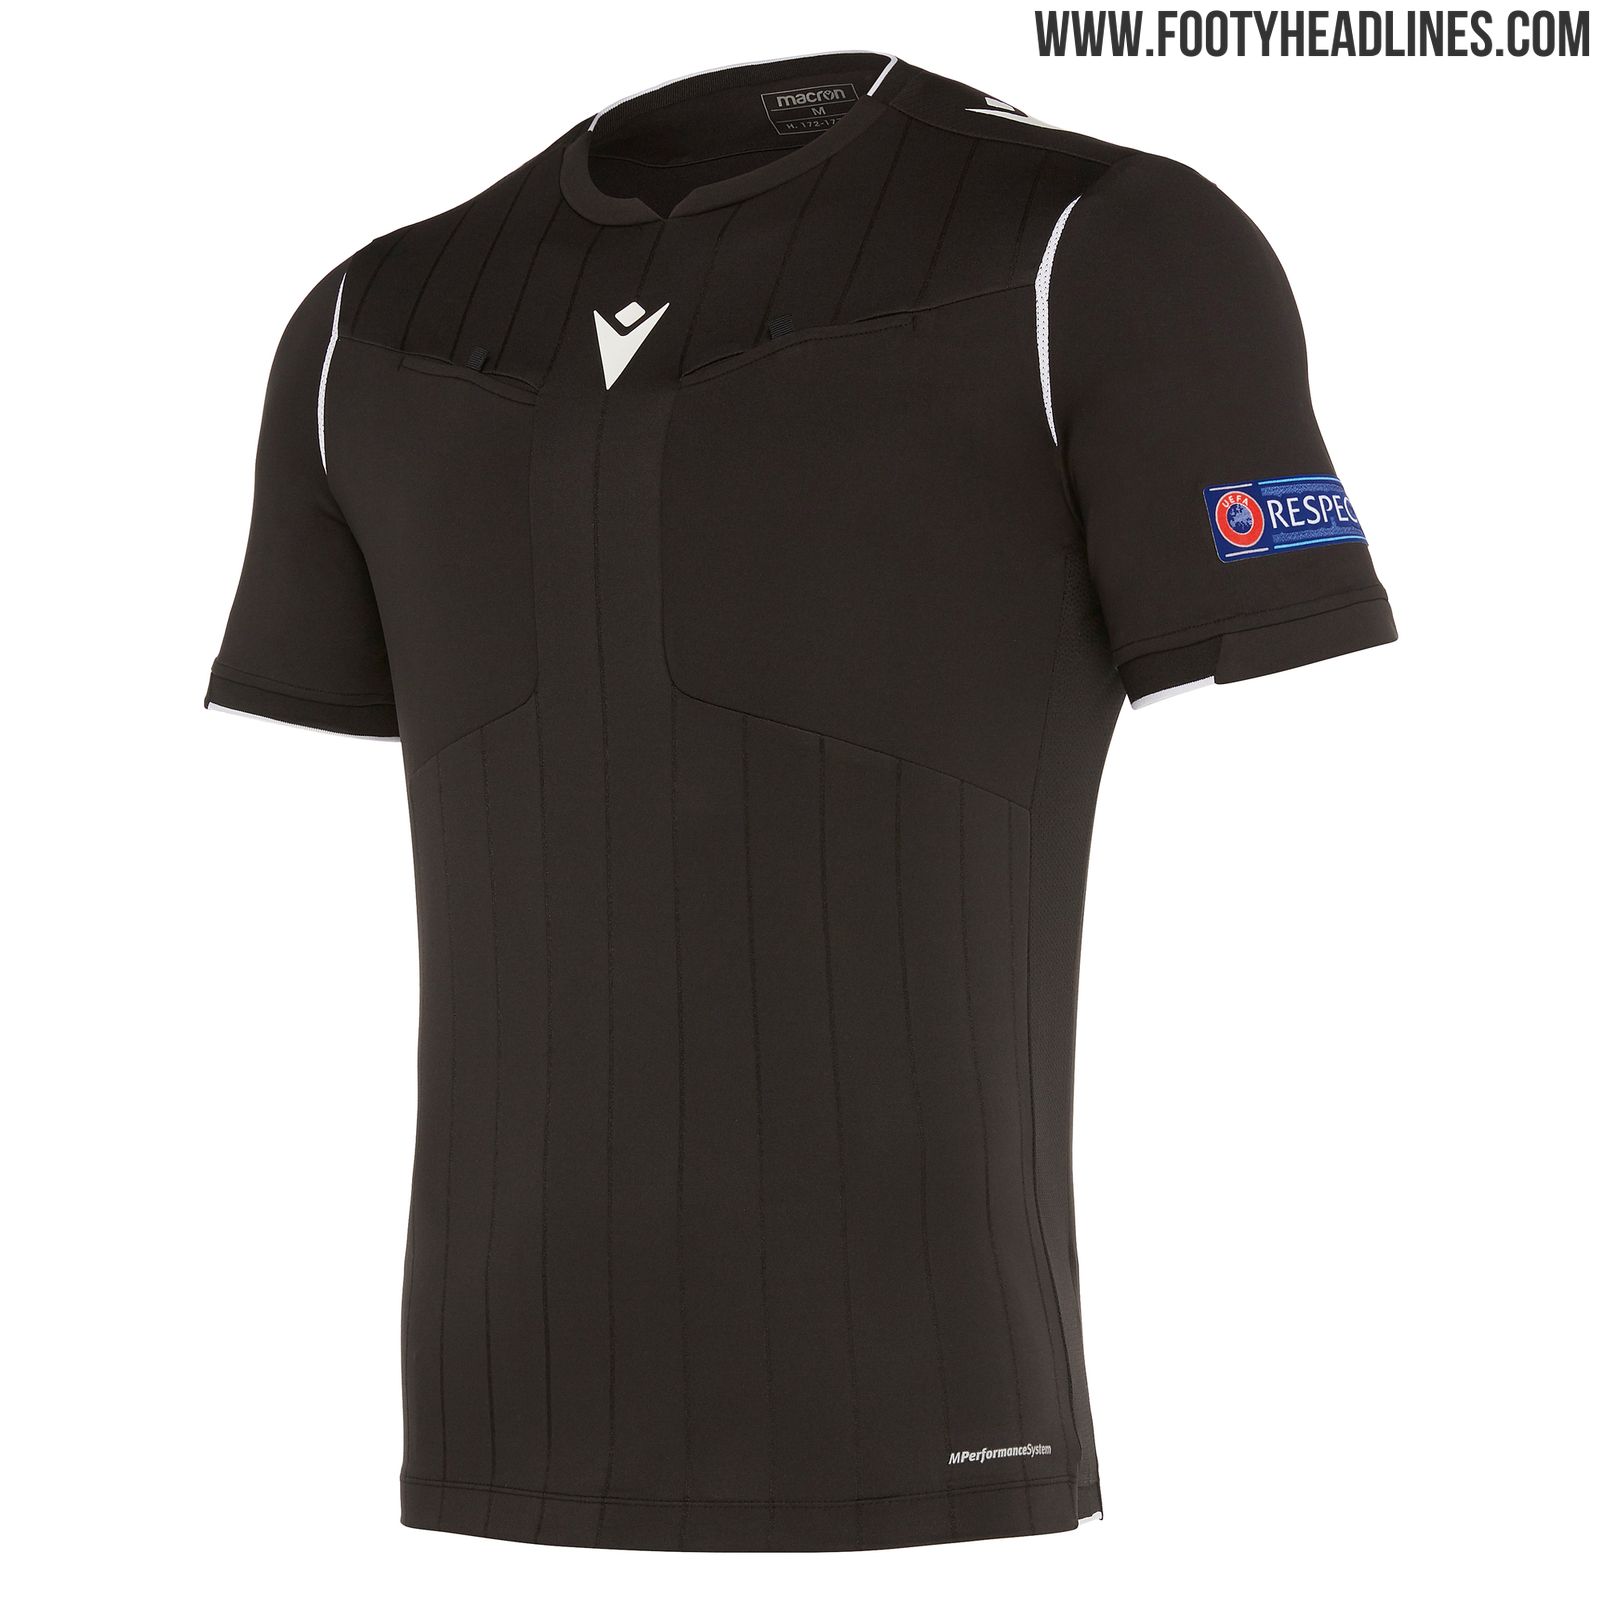 adidas referee kit 2019